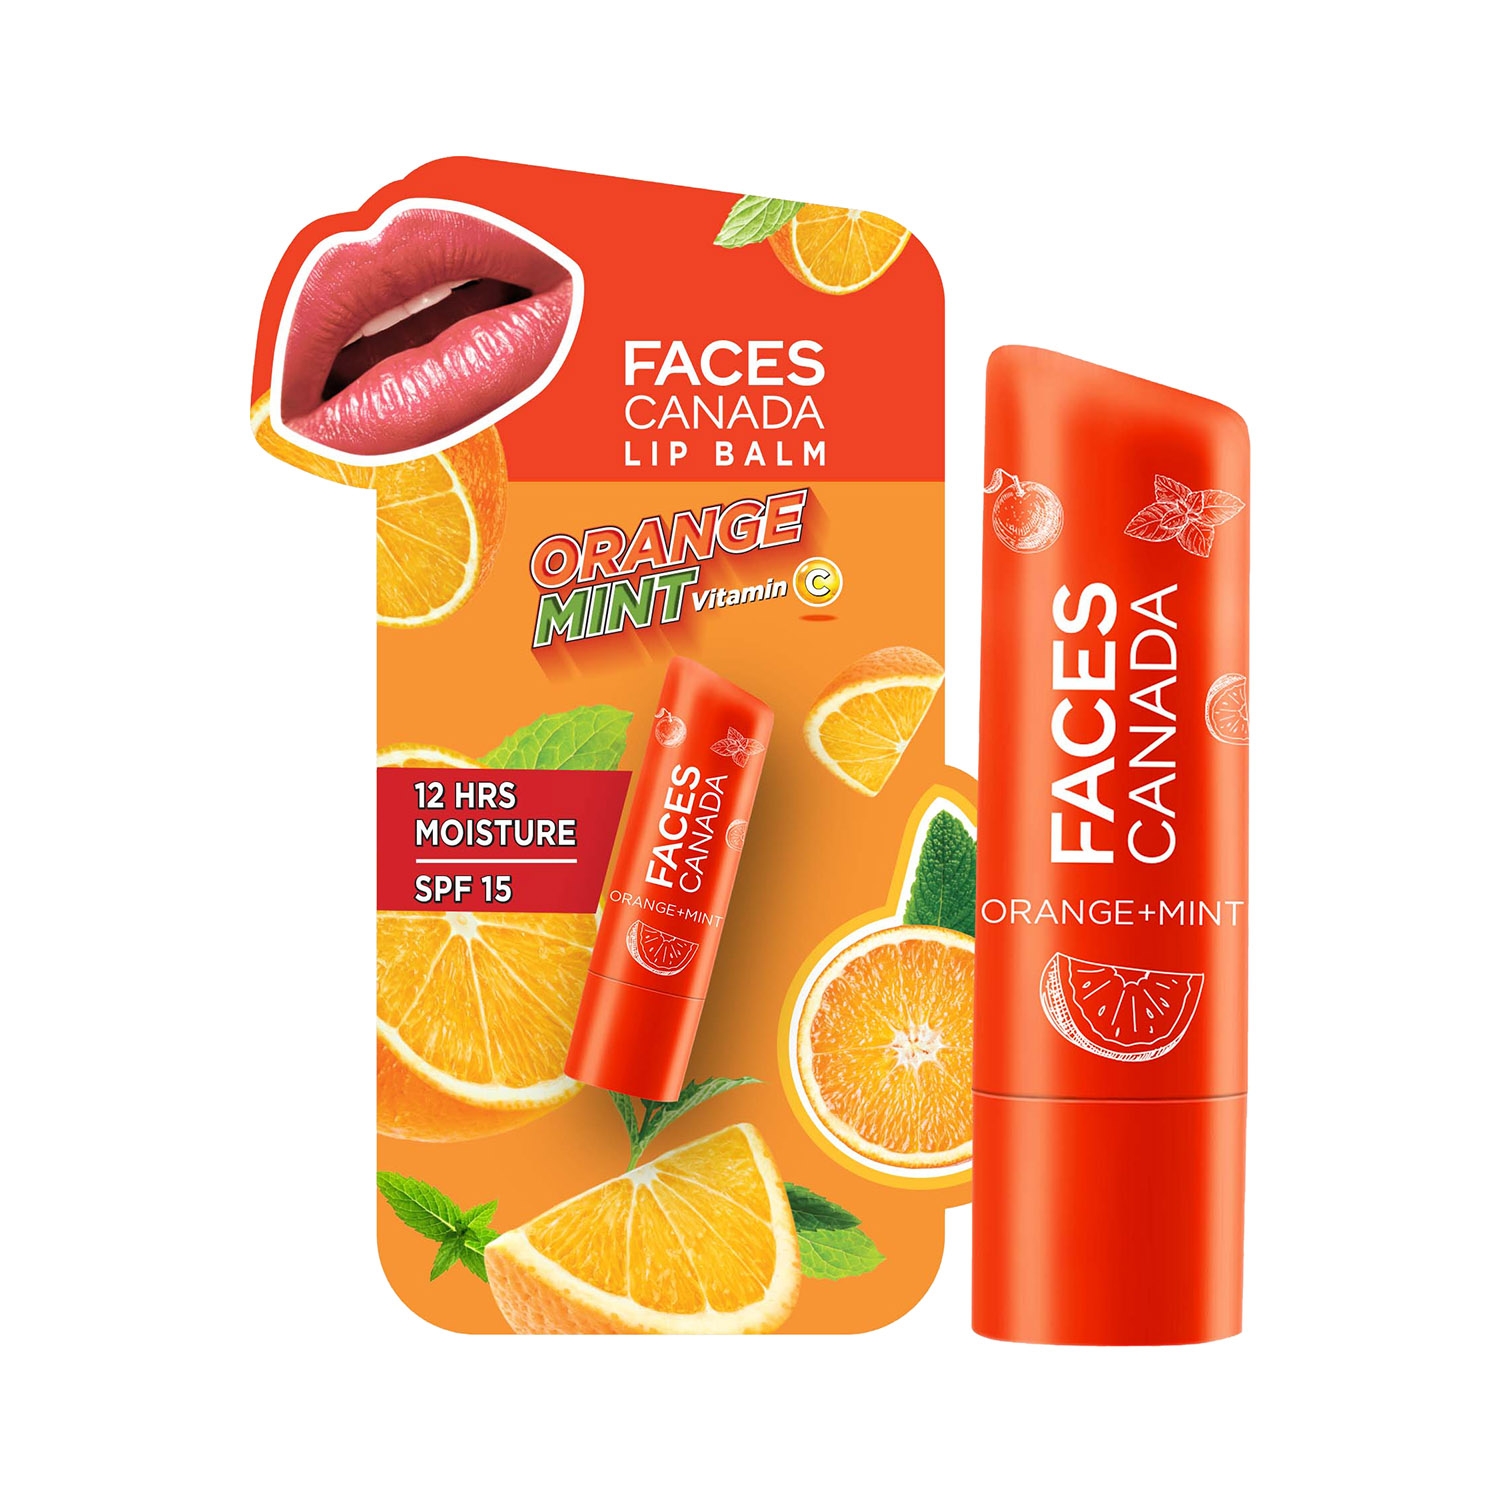 Faces Canada | Faces Canada Lip Balm - 01 Orange Mint (4.8g)